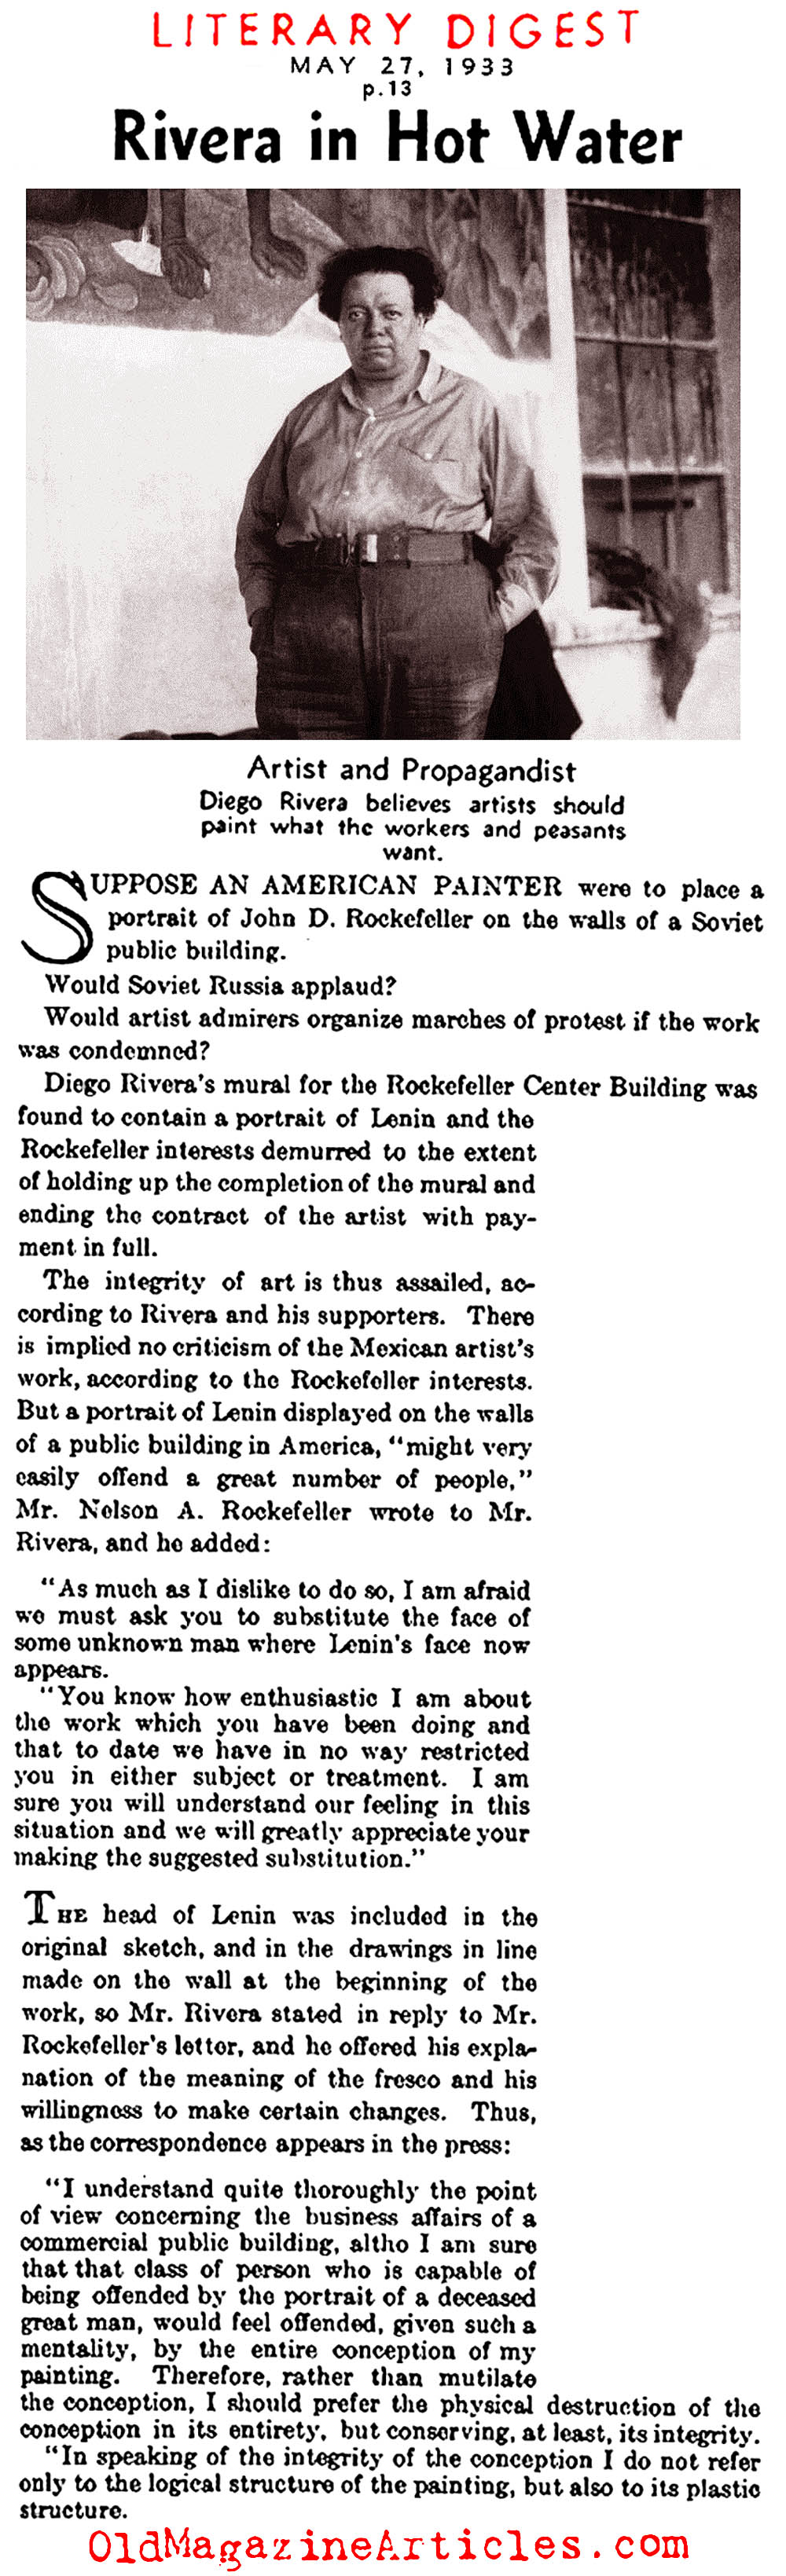 Lenin, Rockefeller and Diego Rivera (The Literay Digest, 1933)